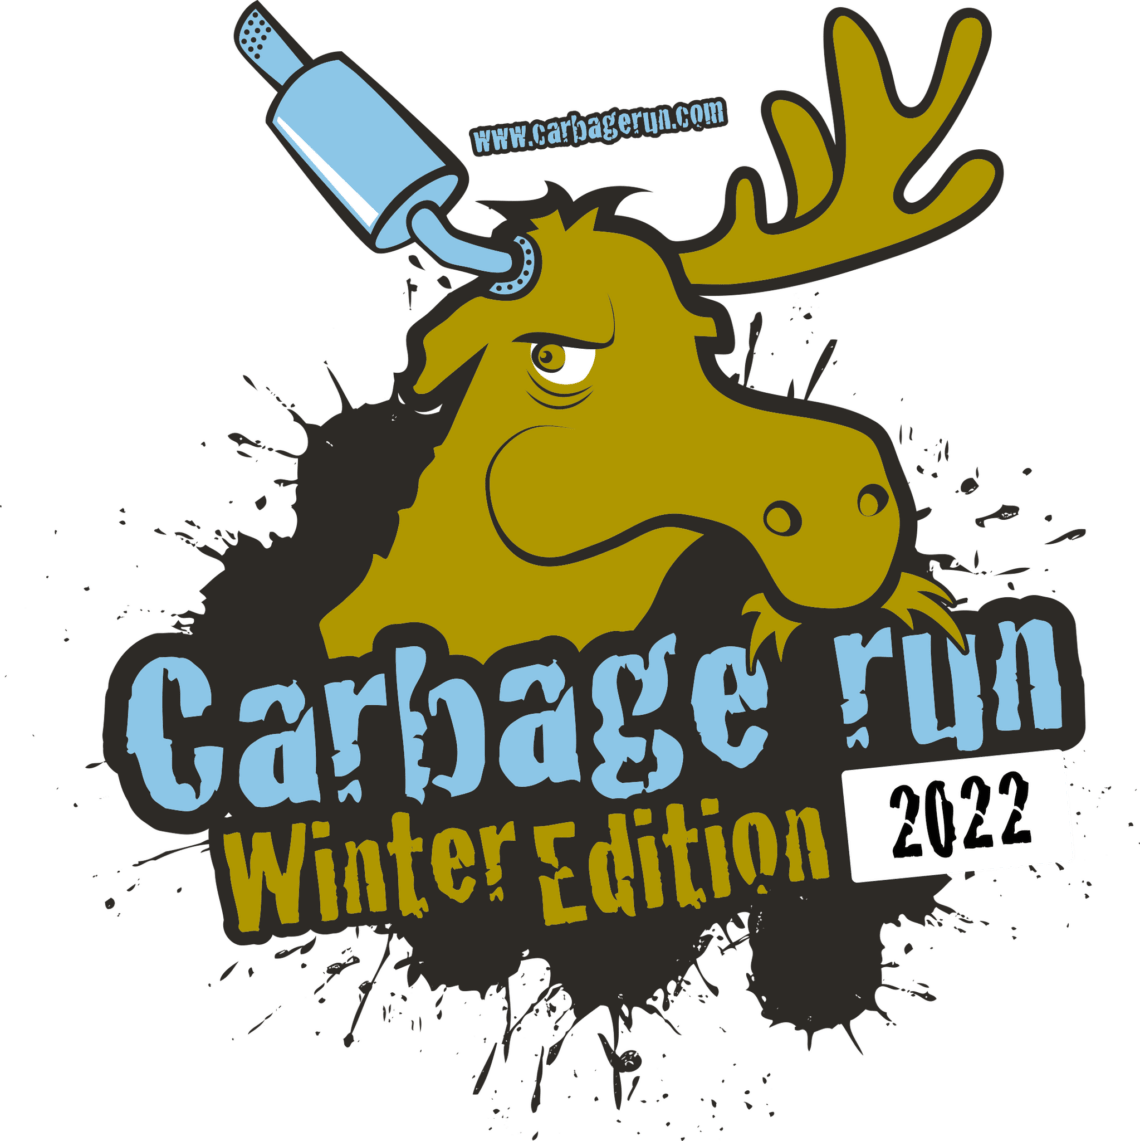 Carbage Run winter